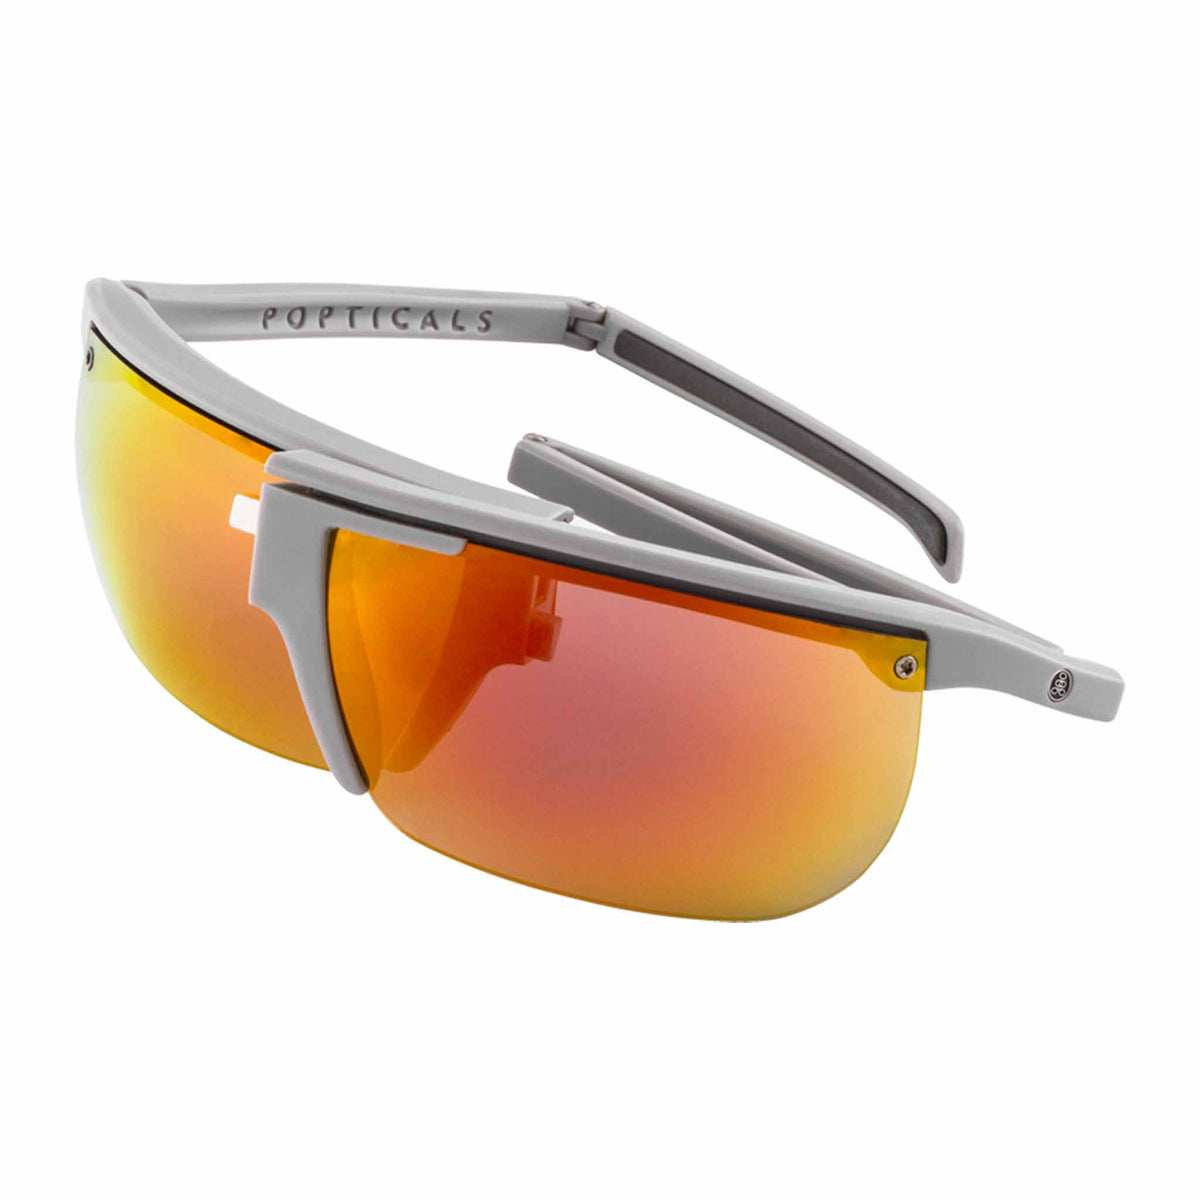 Popticals, Premium Compact Sunglasses, PopArt, 010030-GMON, Polarized Sunglasses, Matte Gray Frame, Gray Lenses with Orange Mirror Finish, Spider View